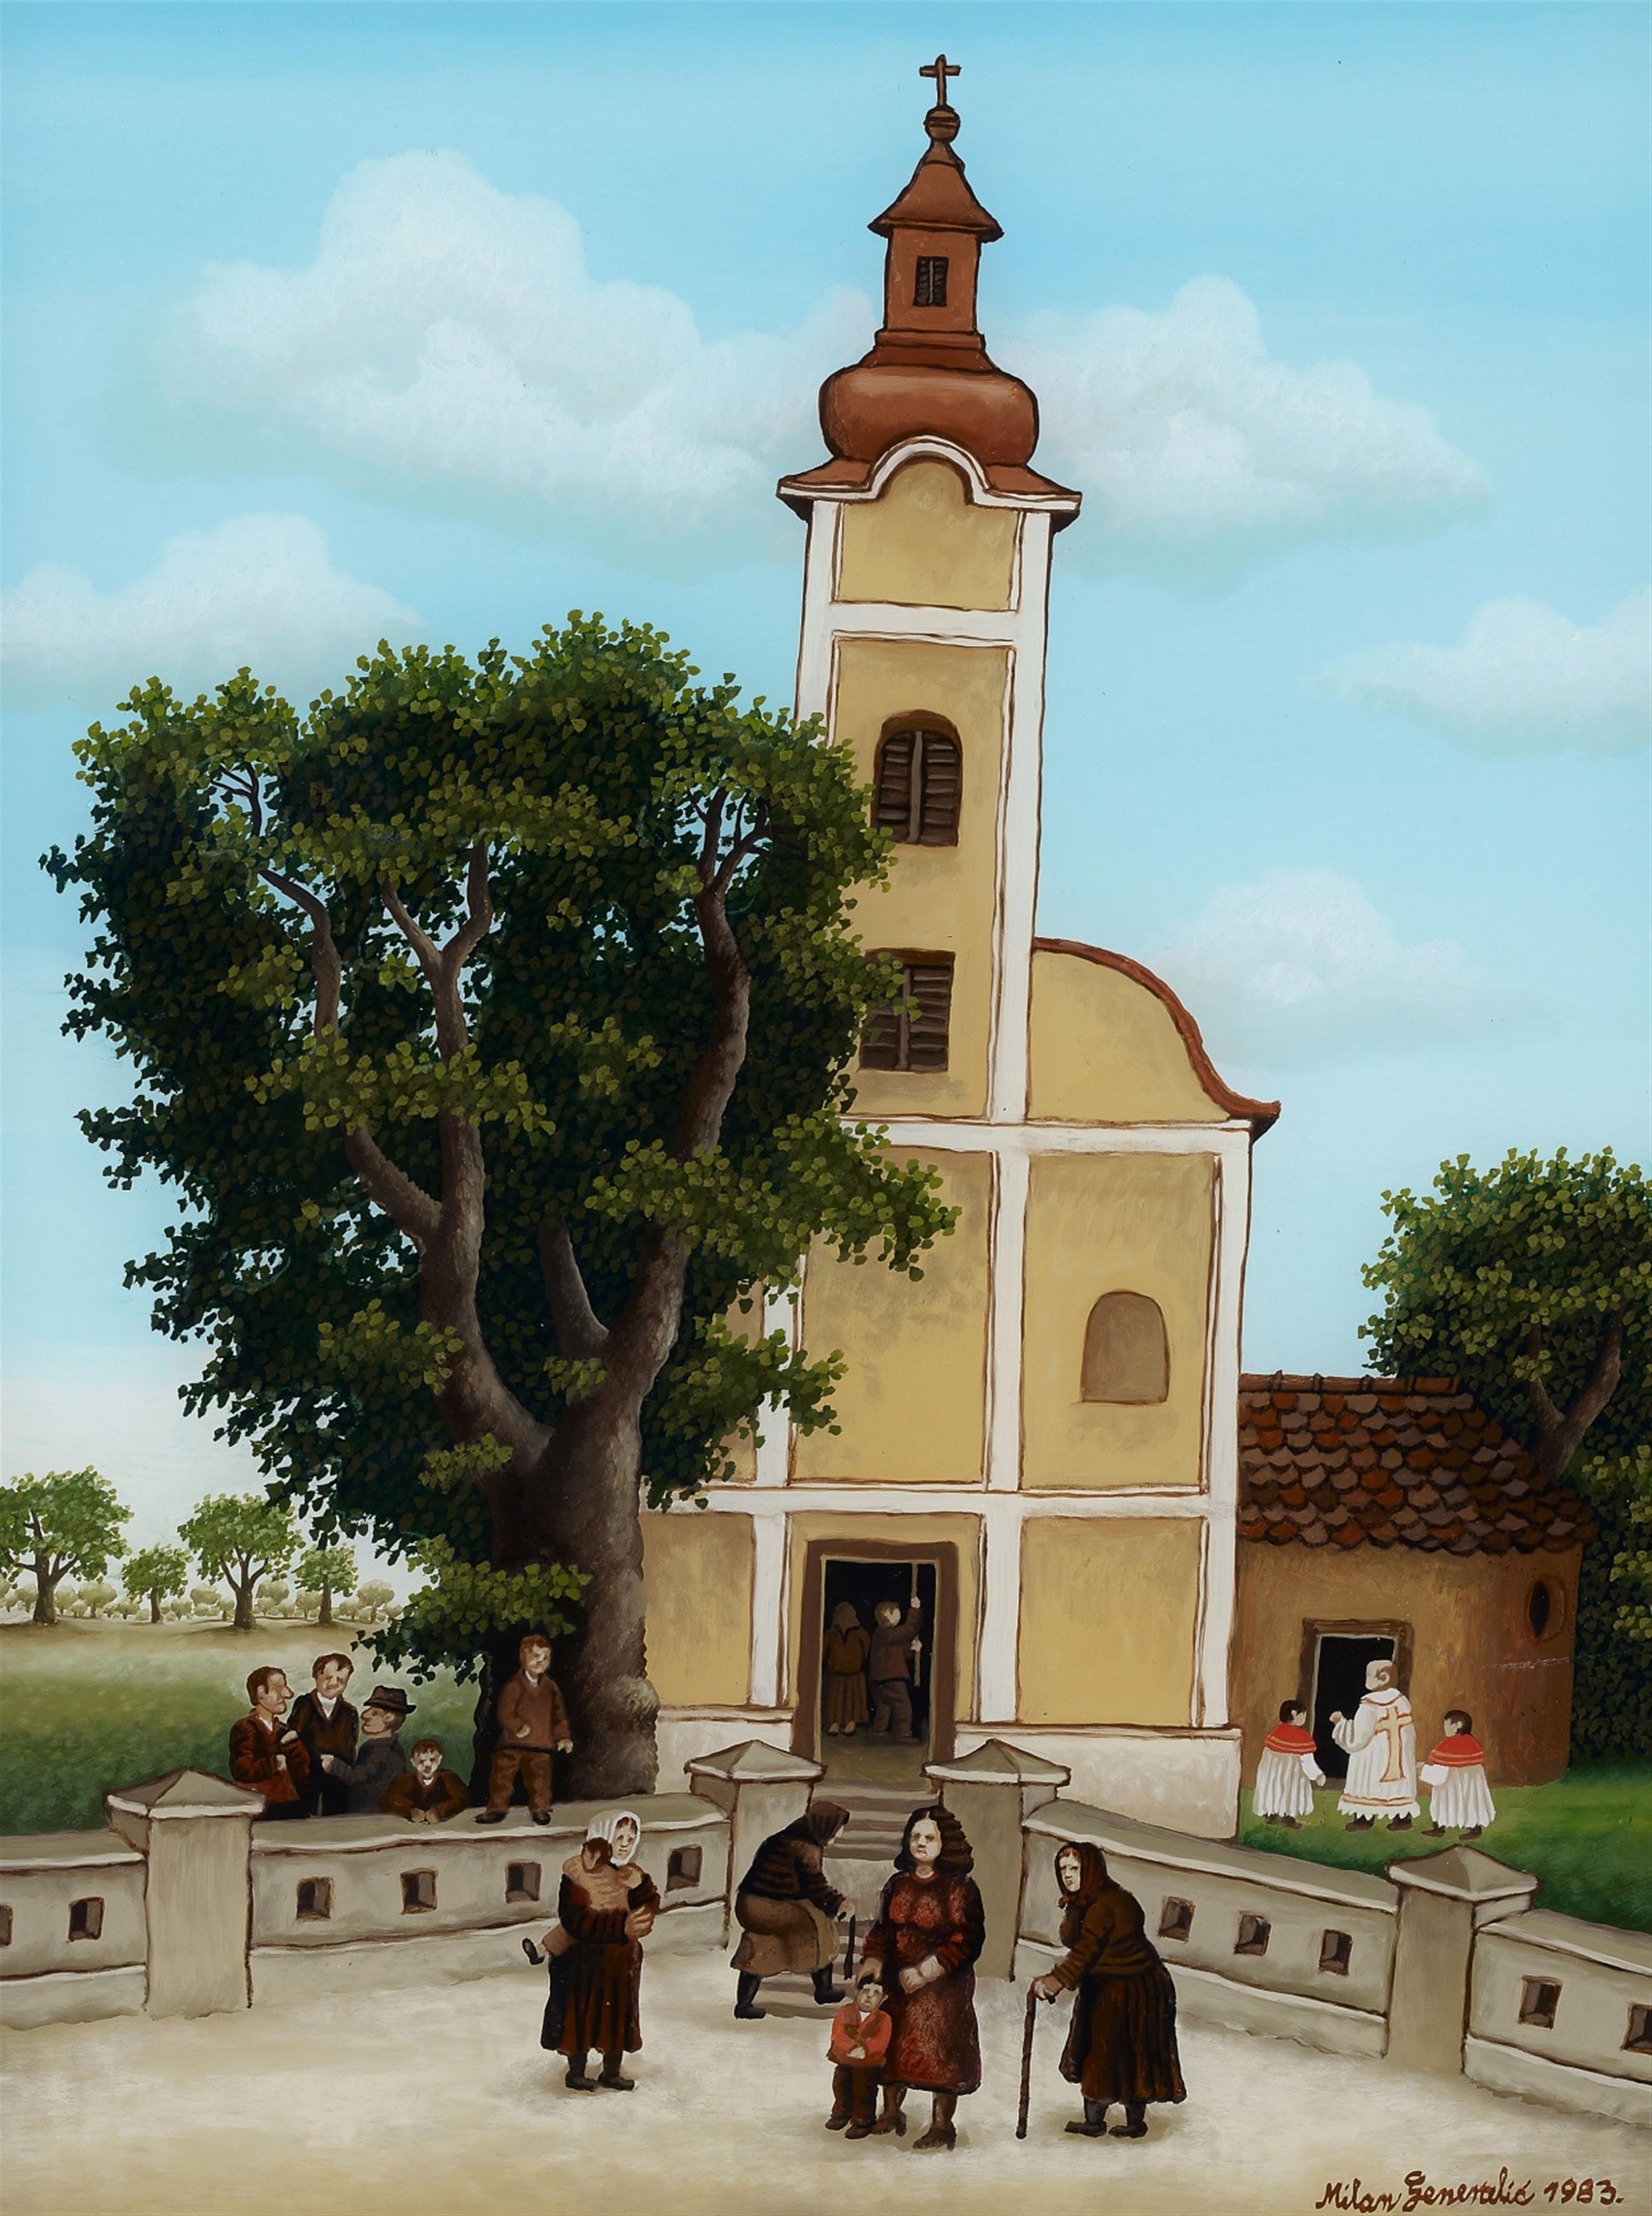 Milan Generalic - Dorfkirche - image-1